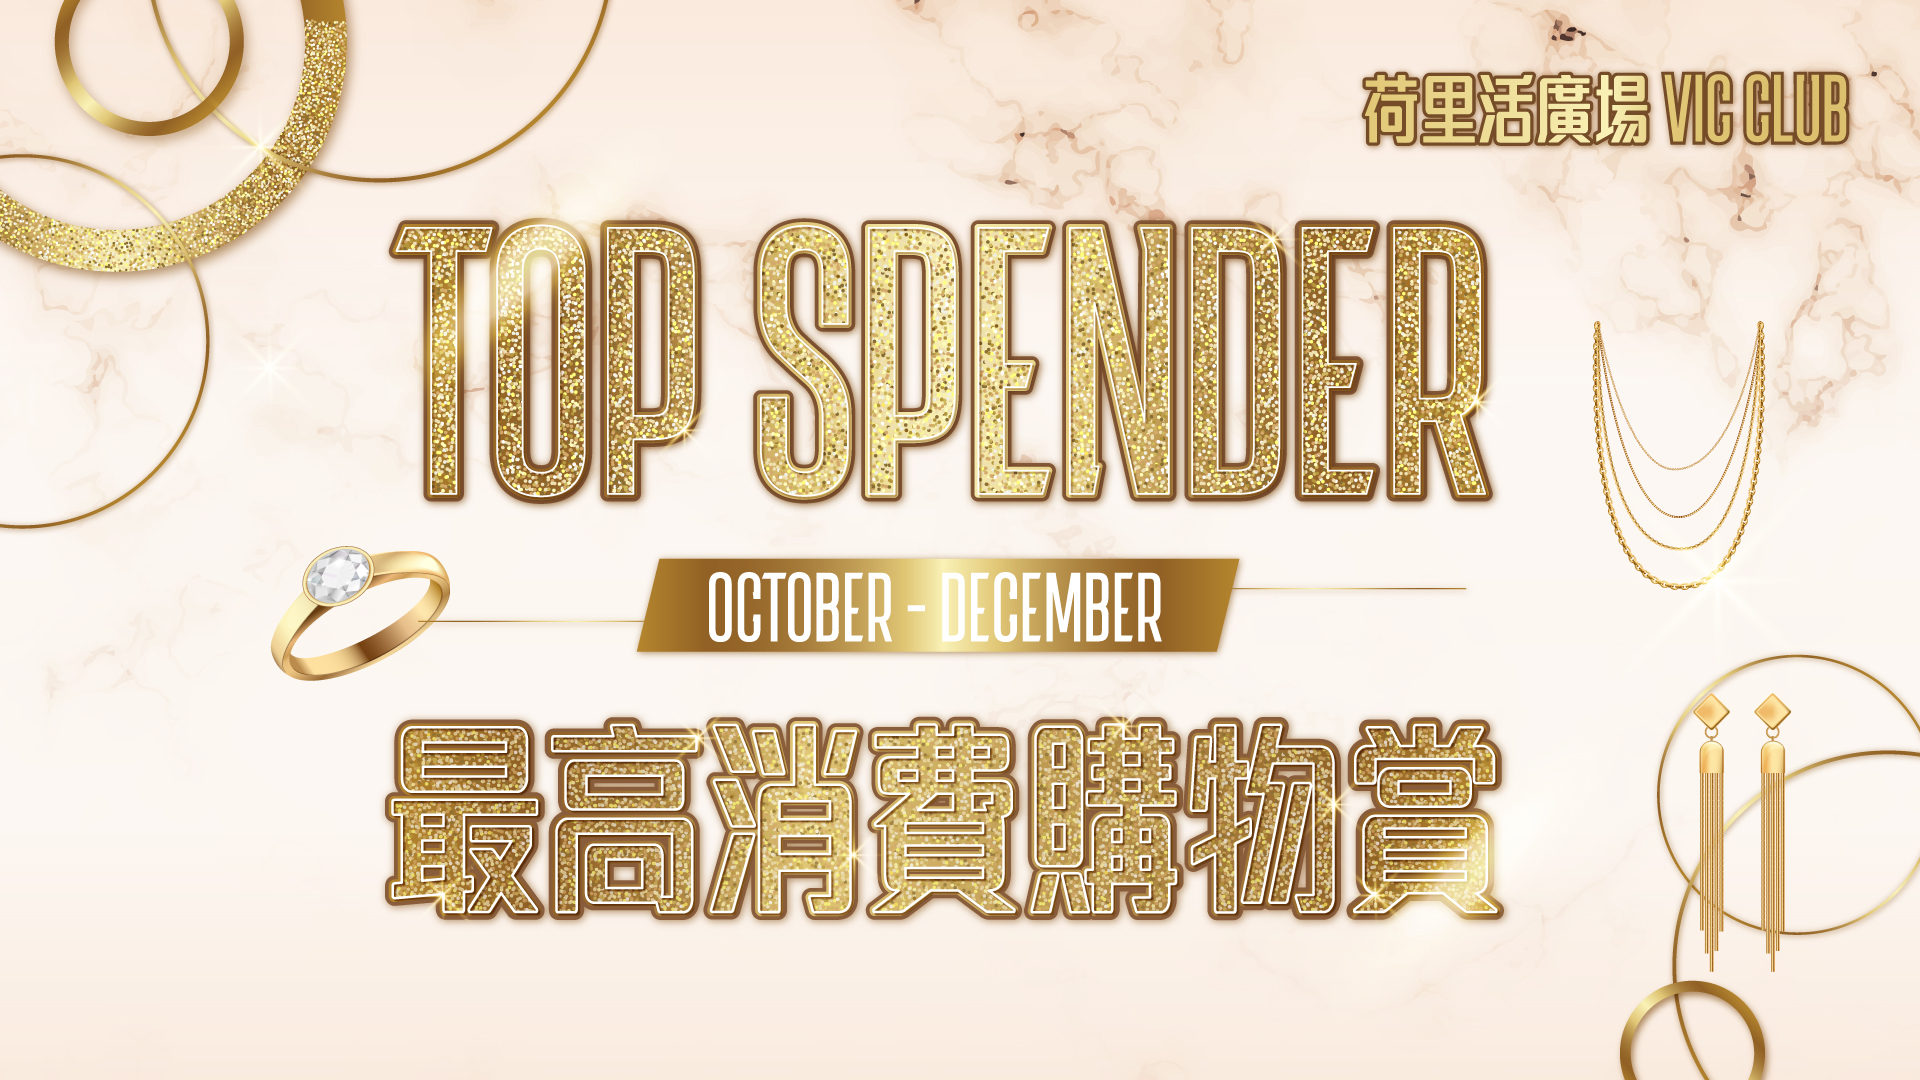 VIC Highest Spending Program (Oct-Dec)